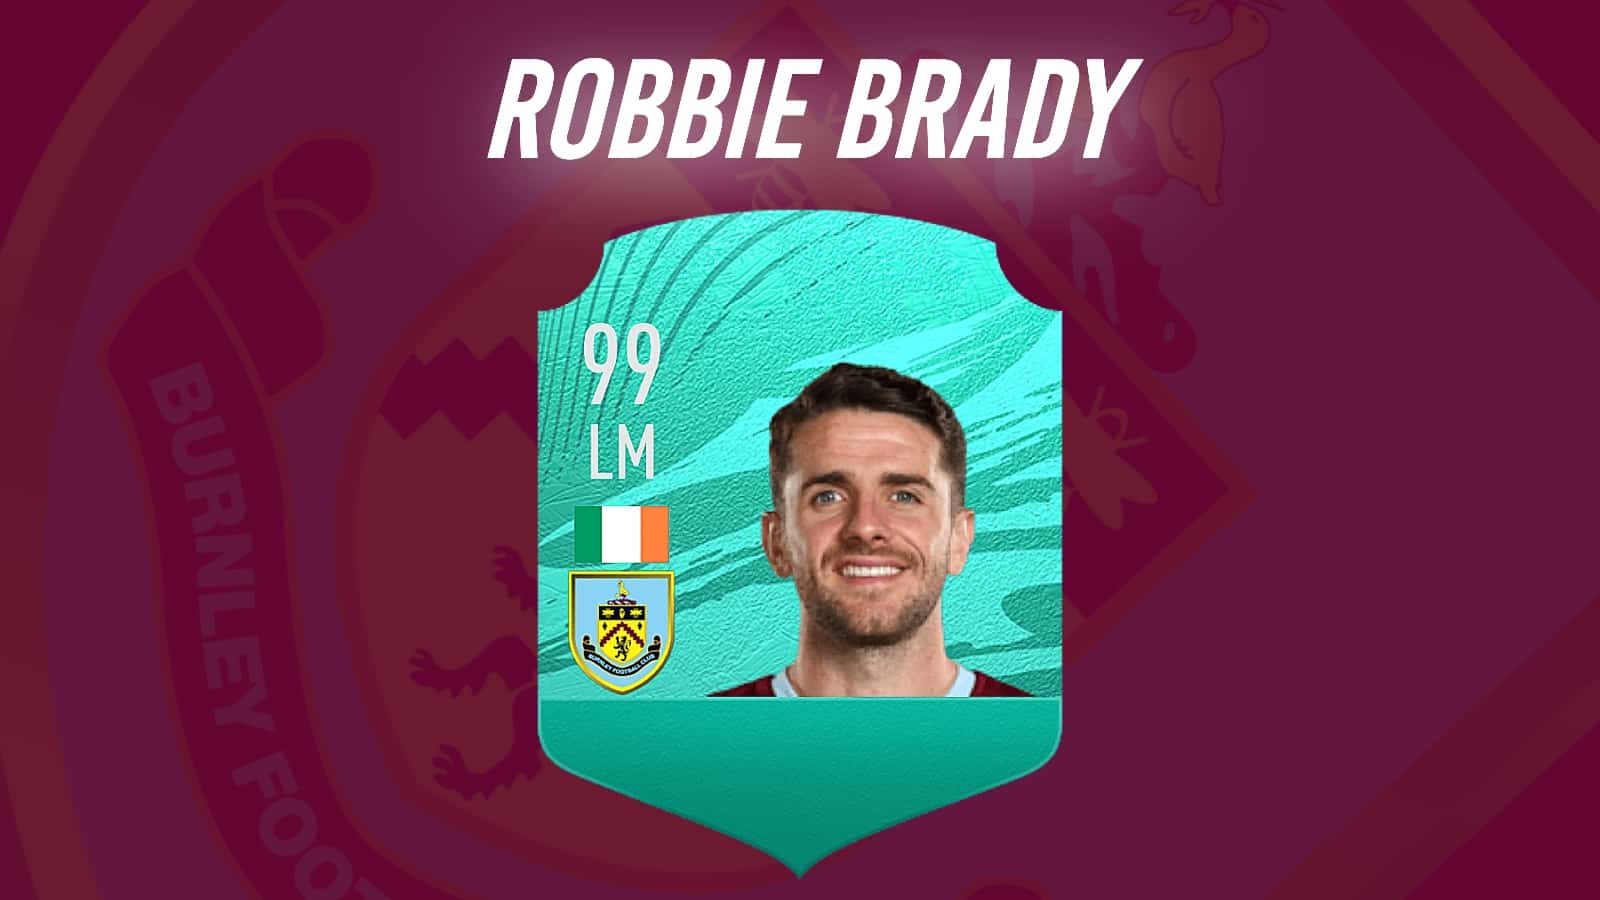 Robbie Brady FIFA 21 Ultimate Team revealed